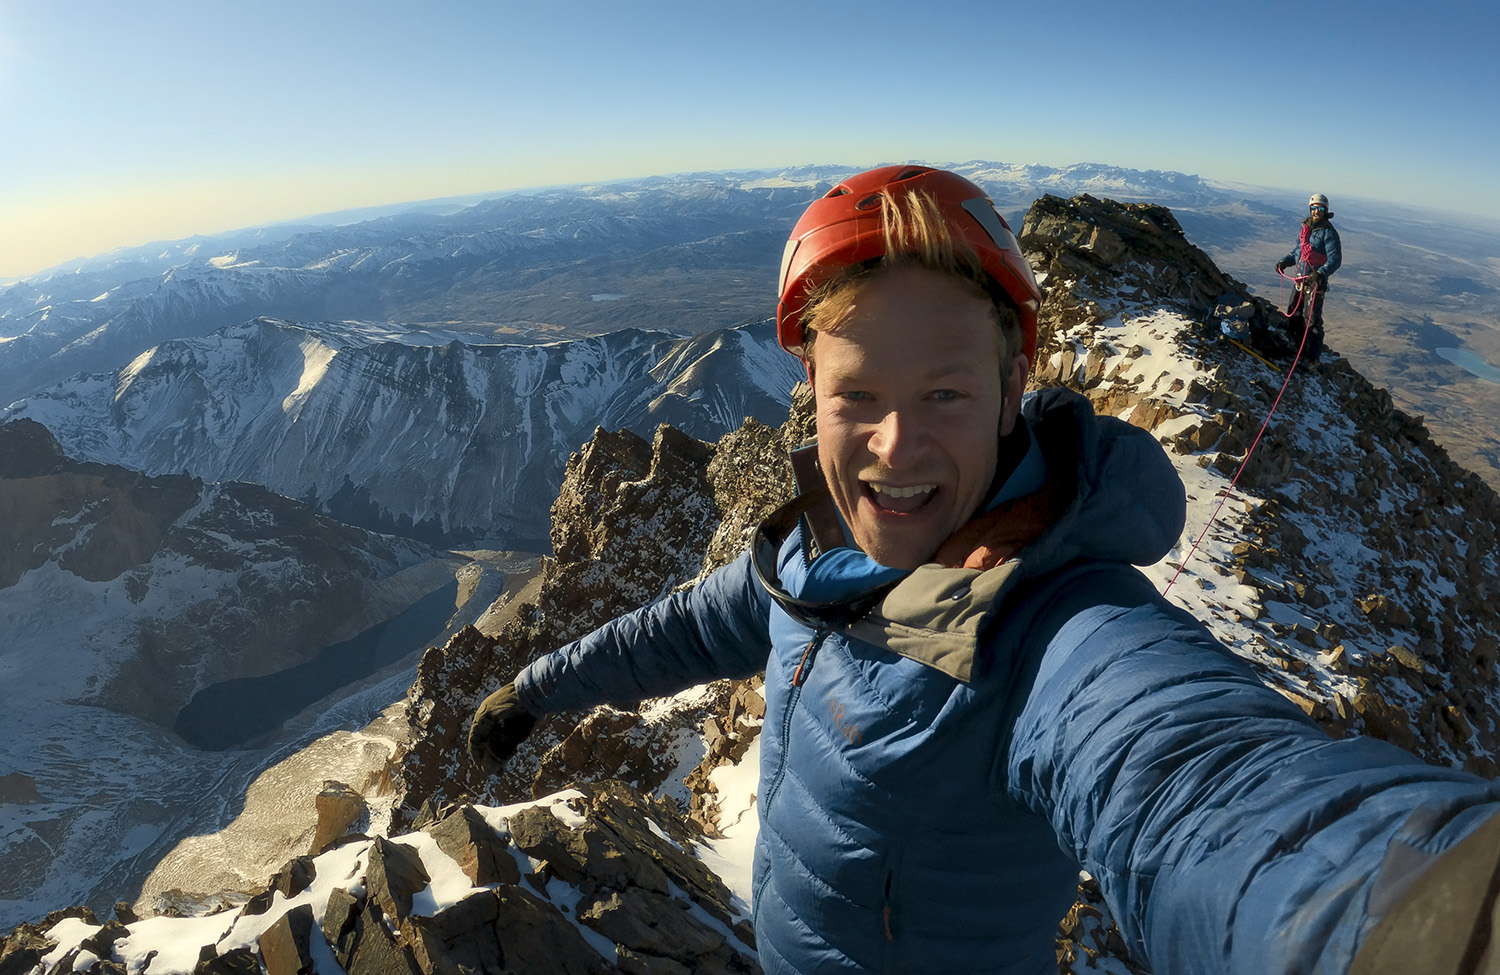 Bertie Gregory taking selfie of himself having reached the peak of the mountain.